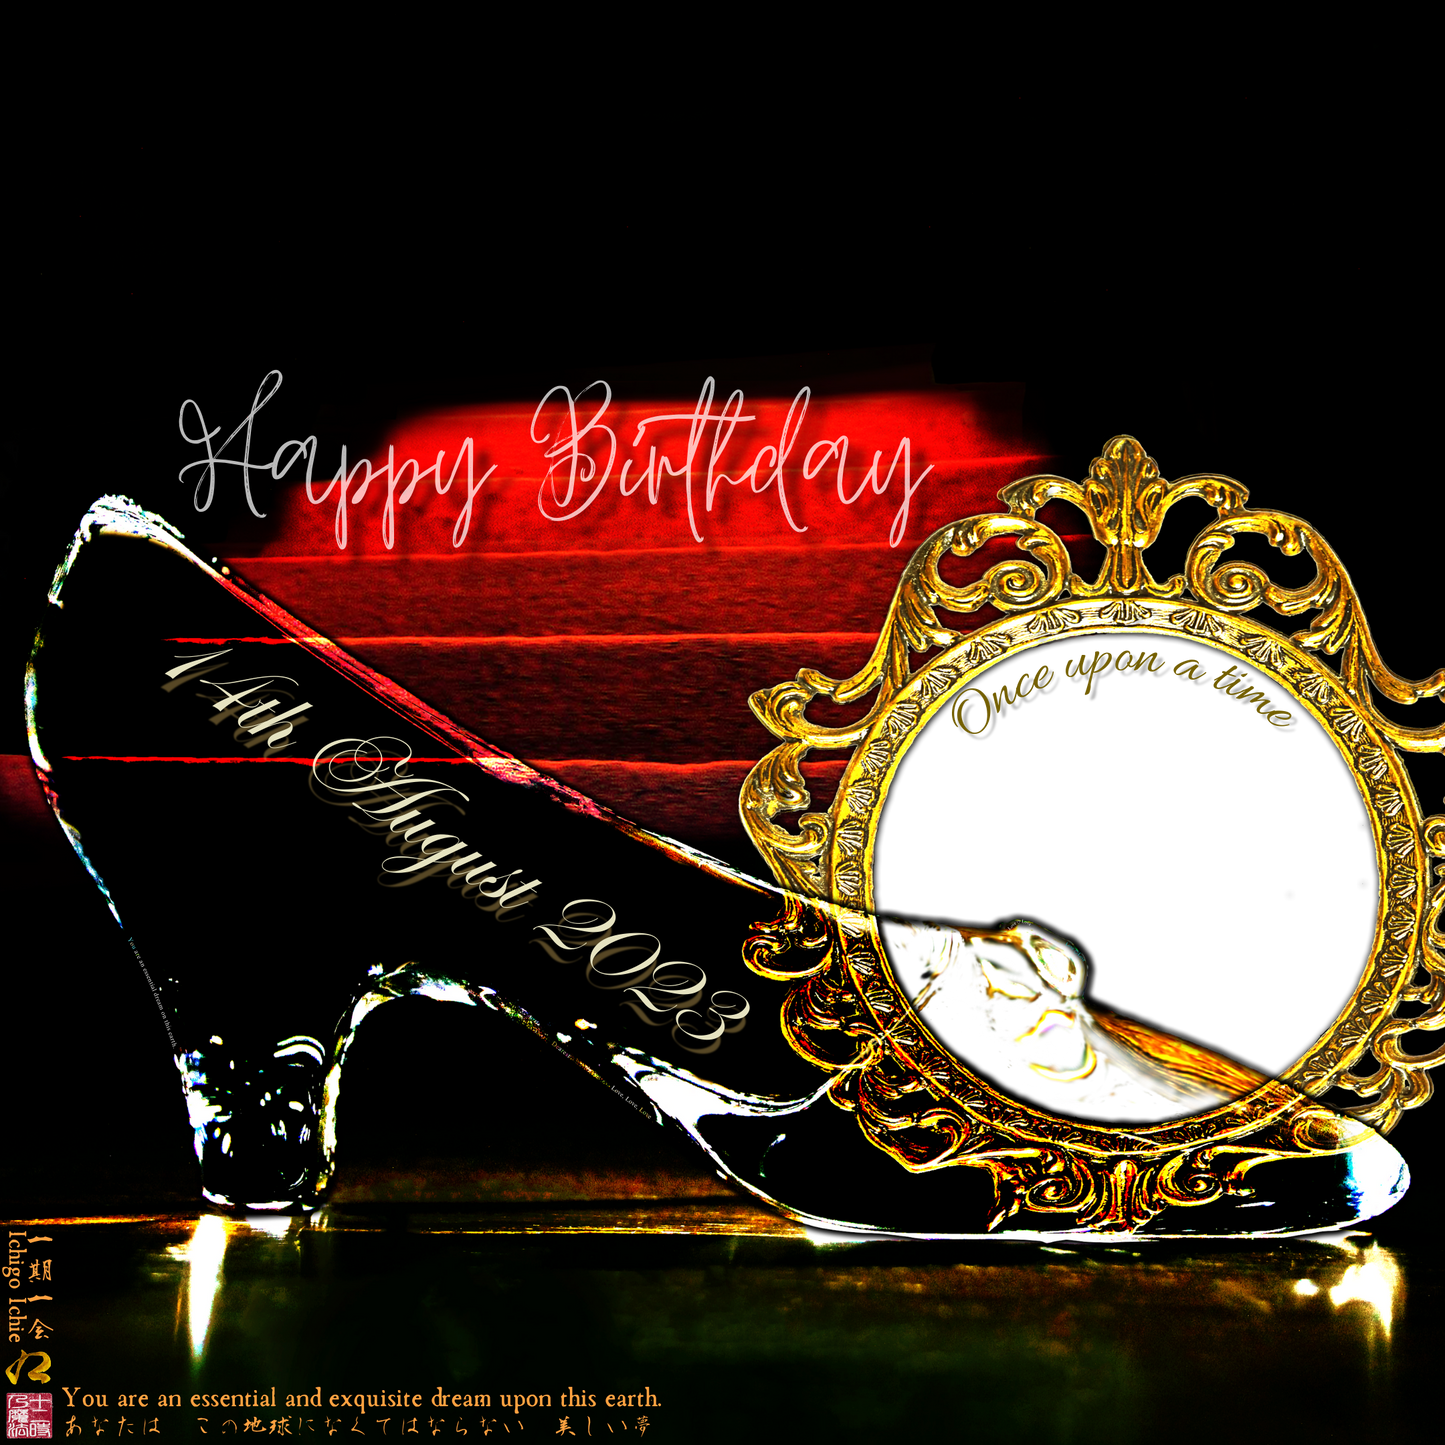 Happy Birthday Glass Slipper "Ichigo Ichie" 14th August 2023 the Right (1-of-1) NFT Art